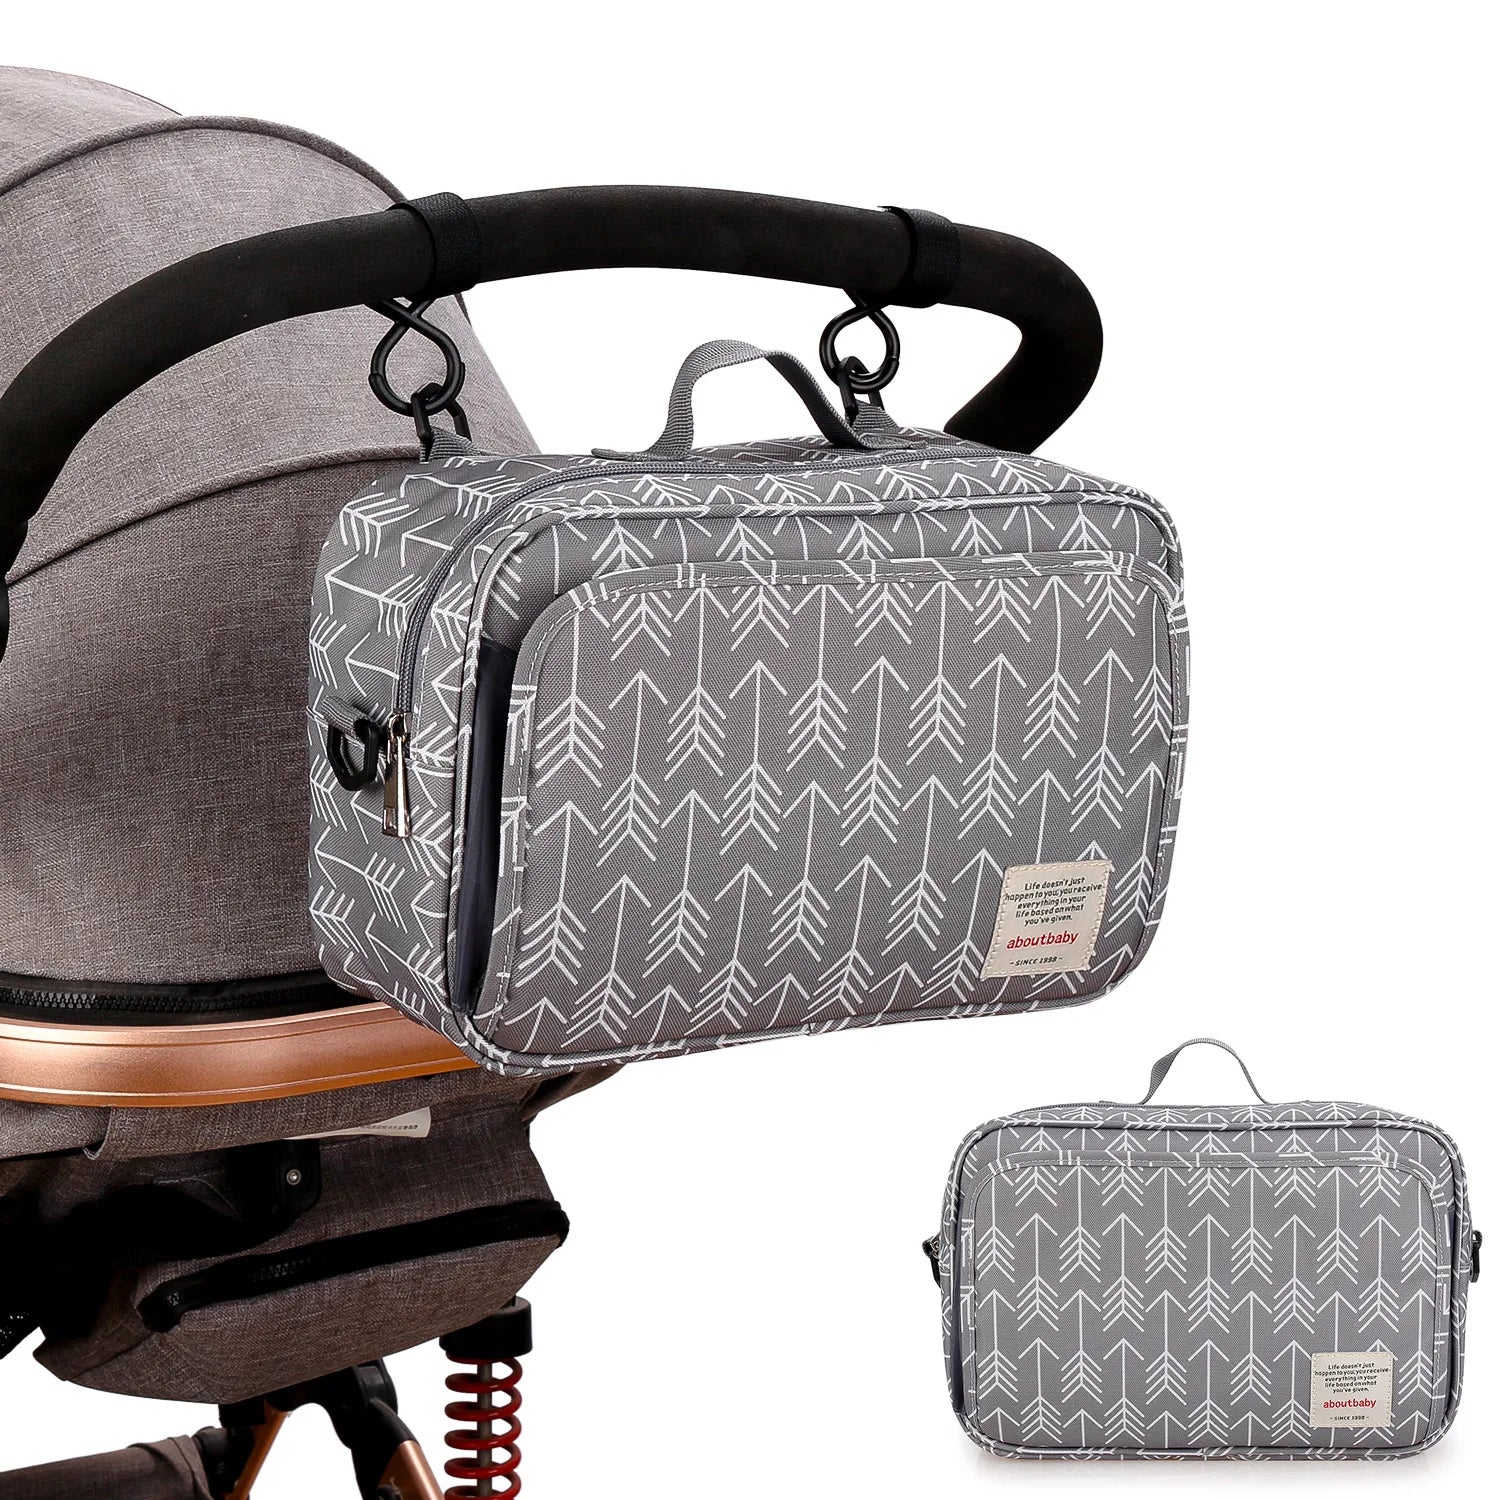 Stylish & Spacious Stroller Bag